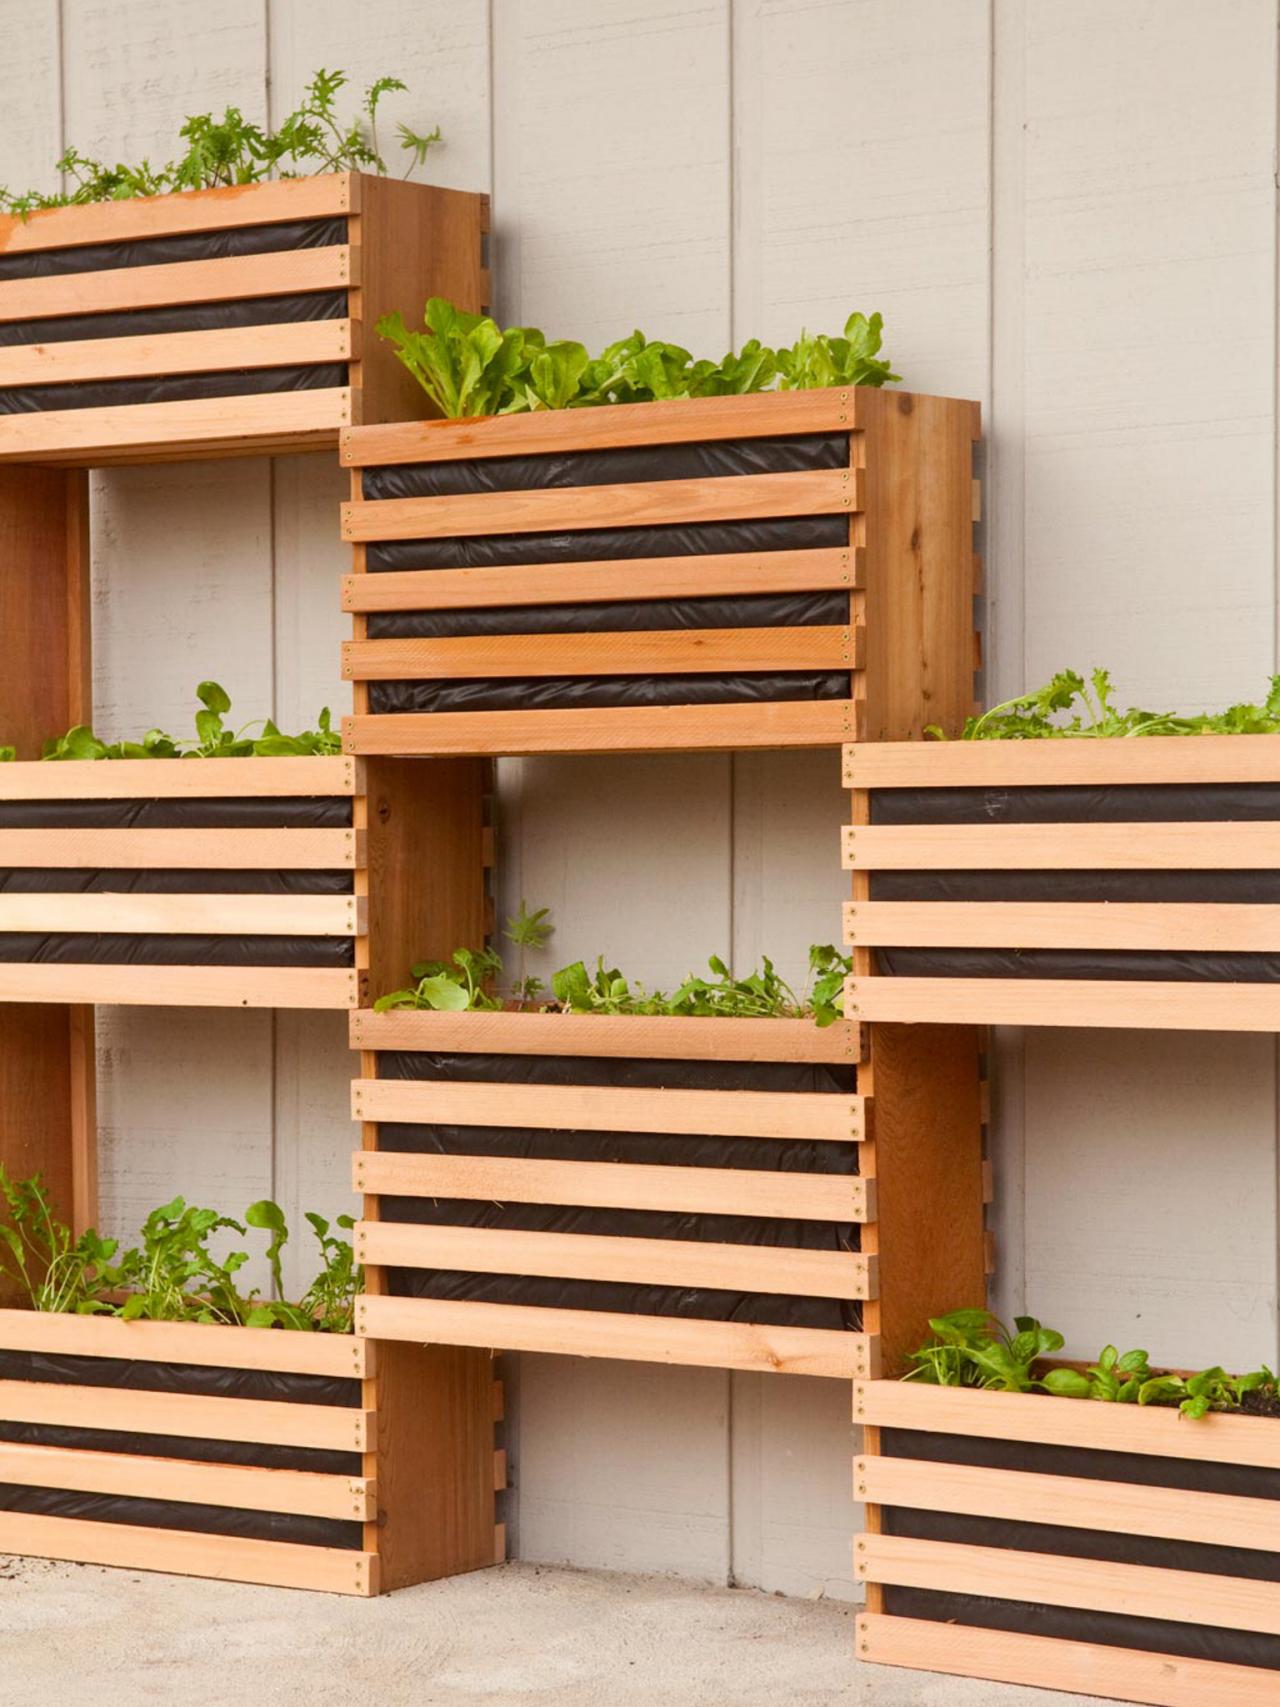 10 Vertical Planter Ideas For Summer  HGTVs Decorating  Design Blog  HGTV